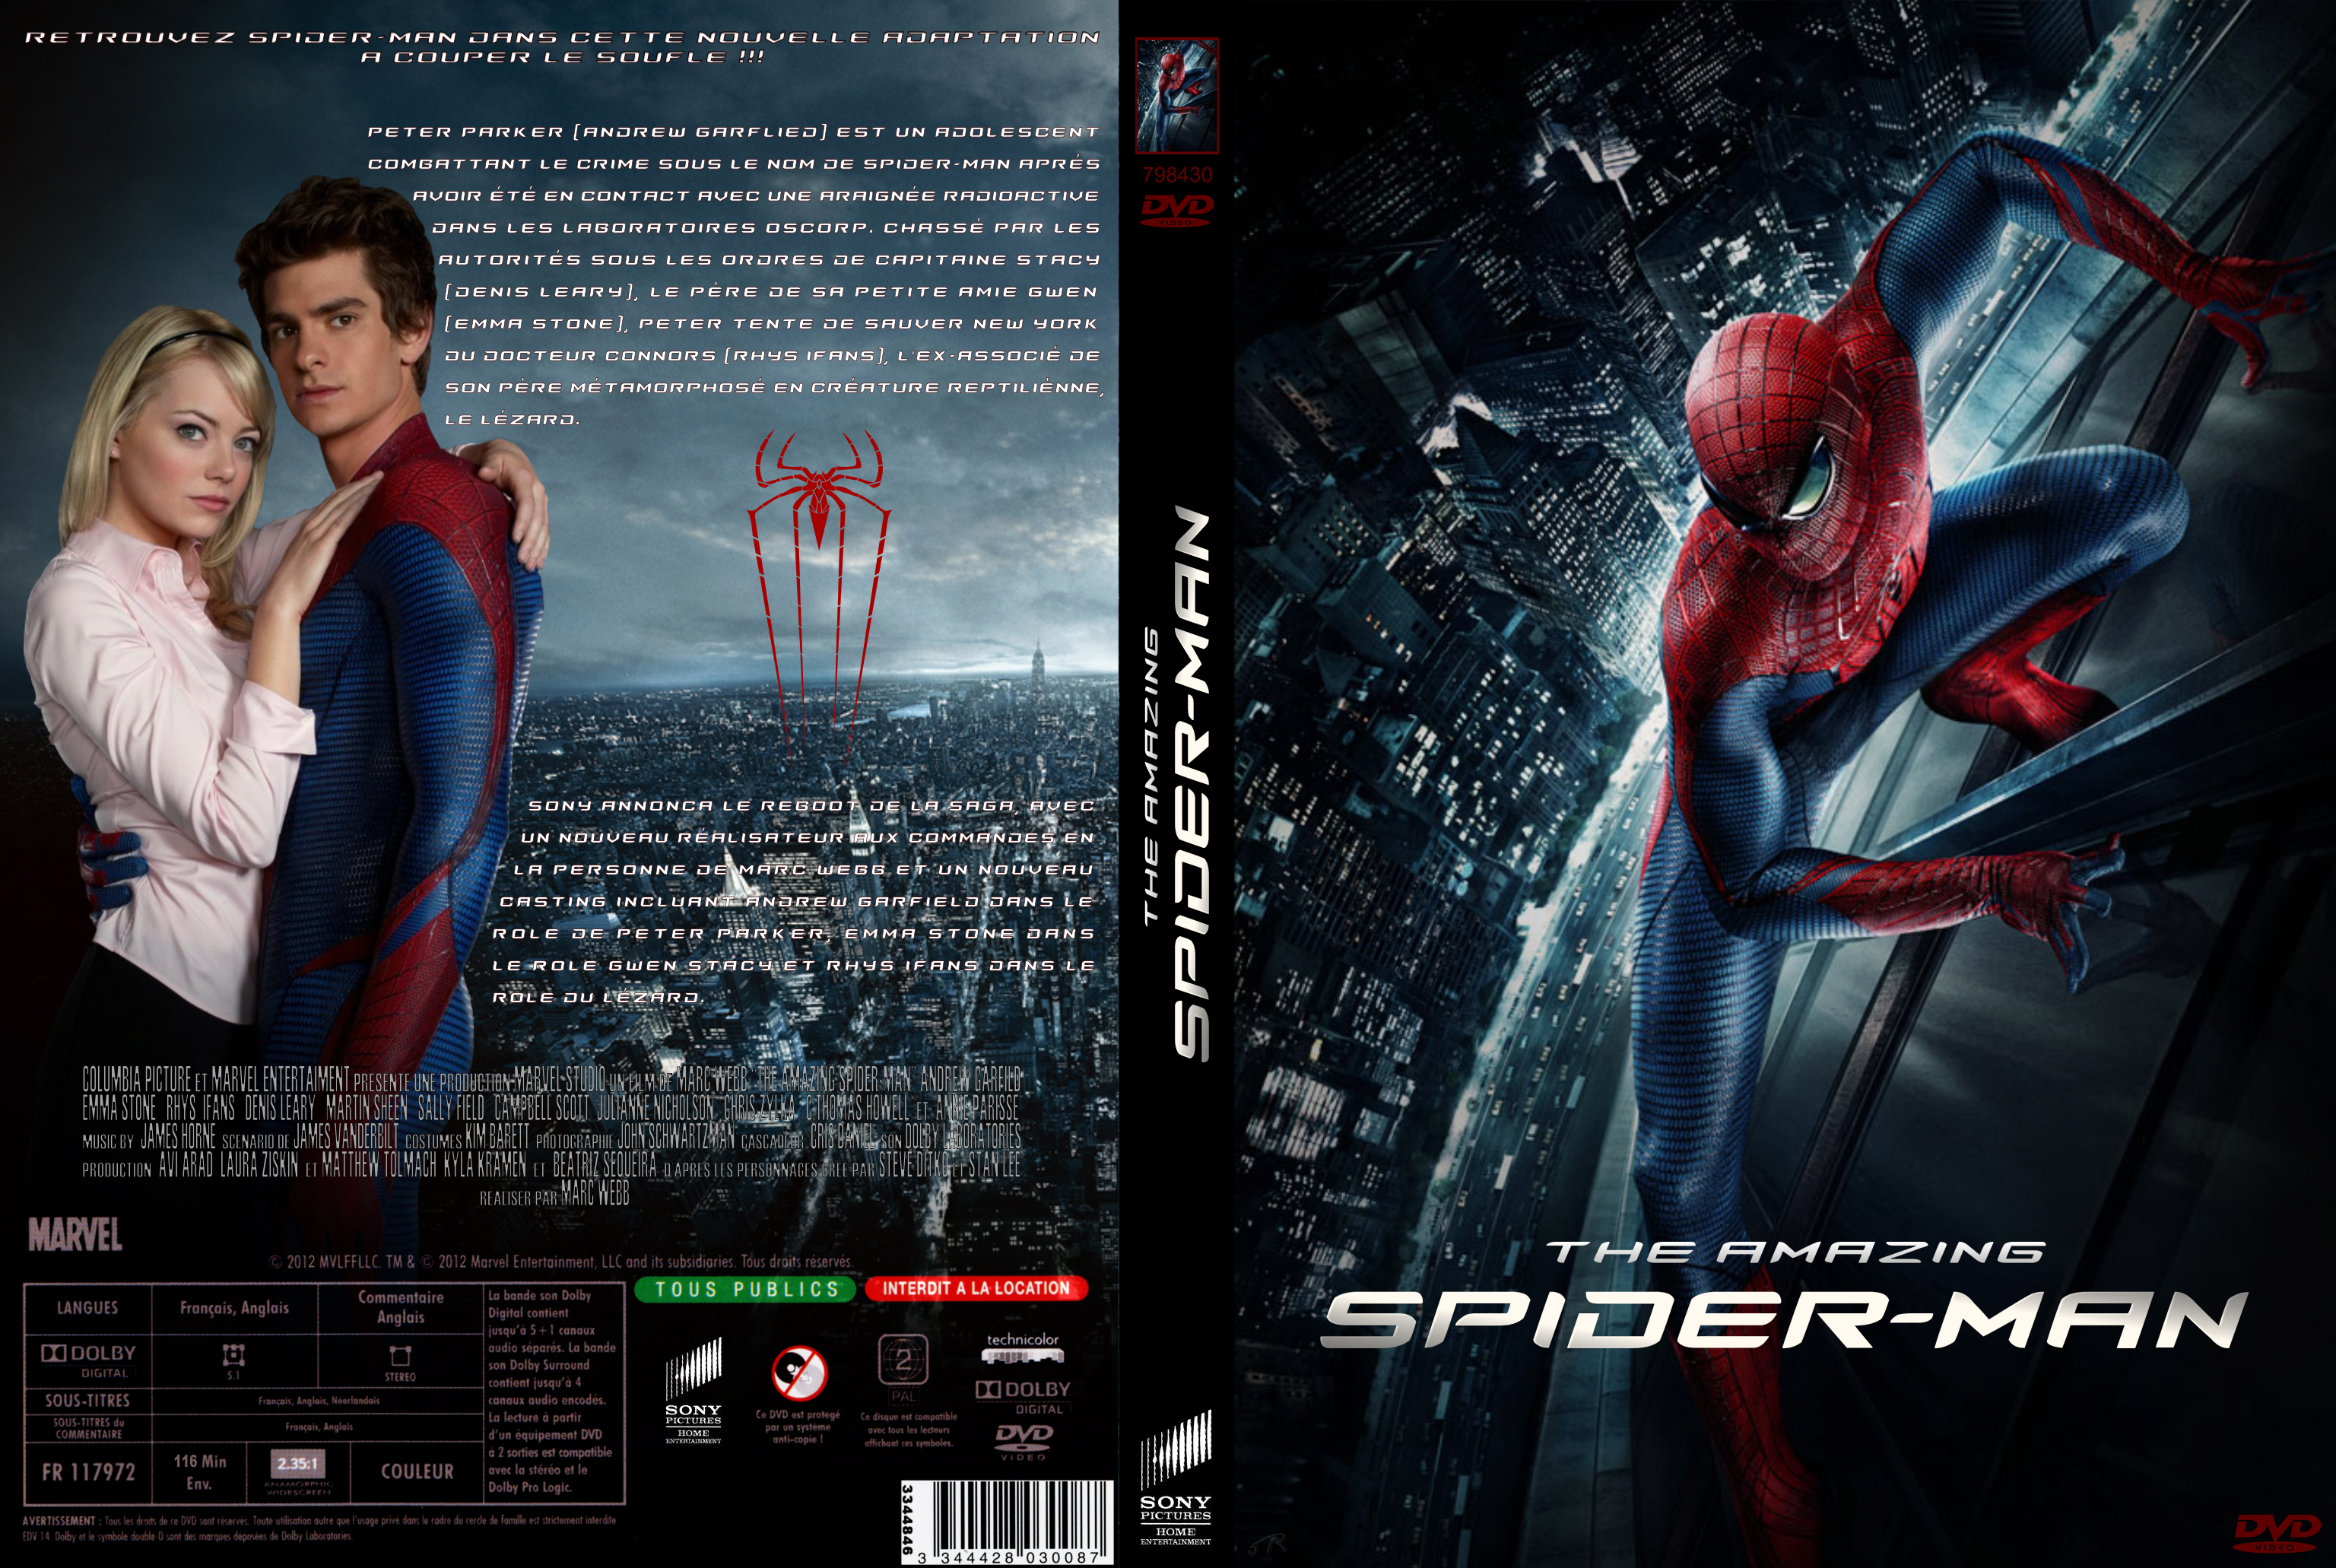 Jaquette DVD The Amazing Spider-Man custom v2